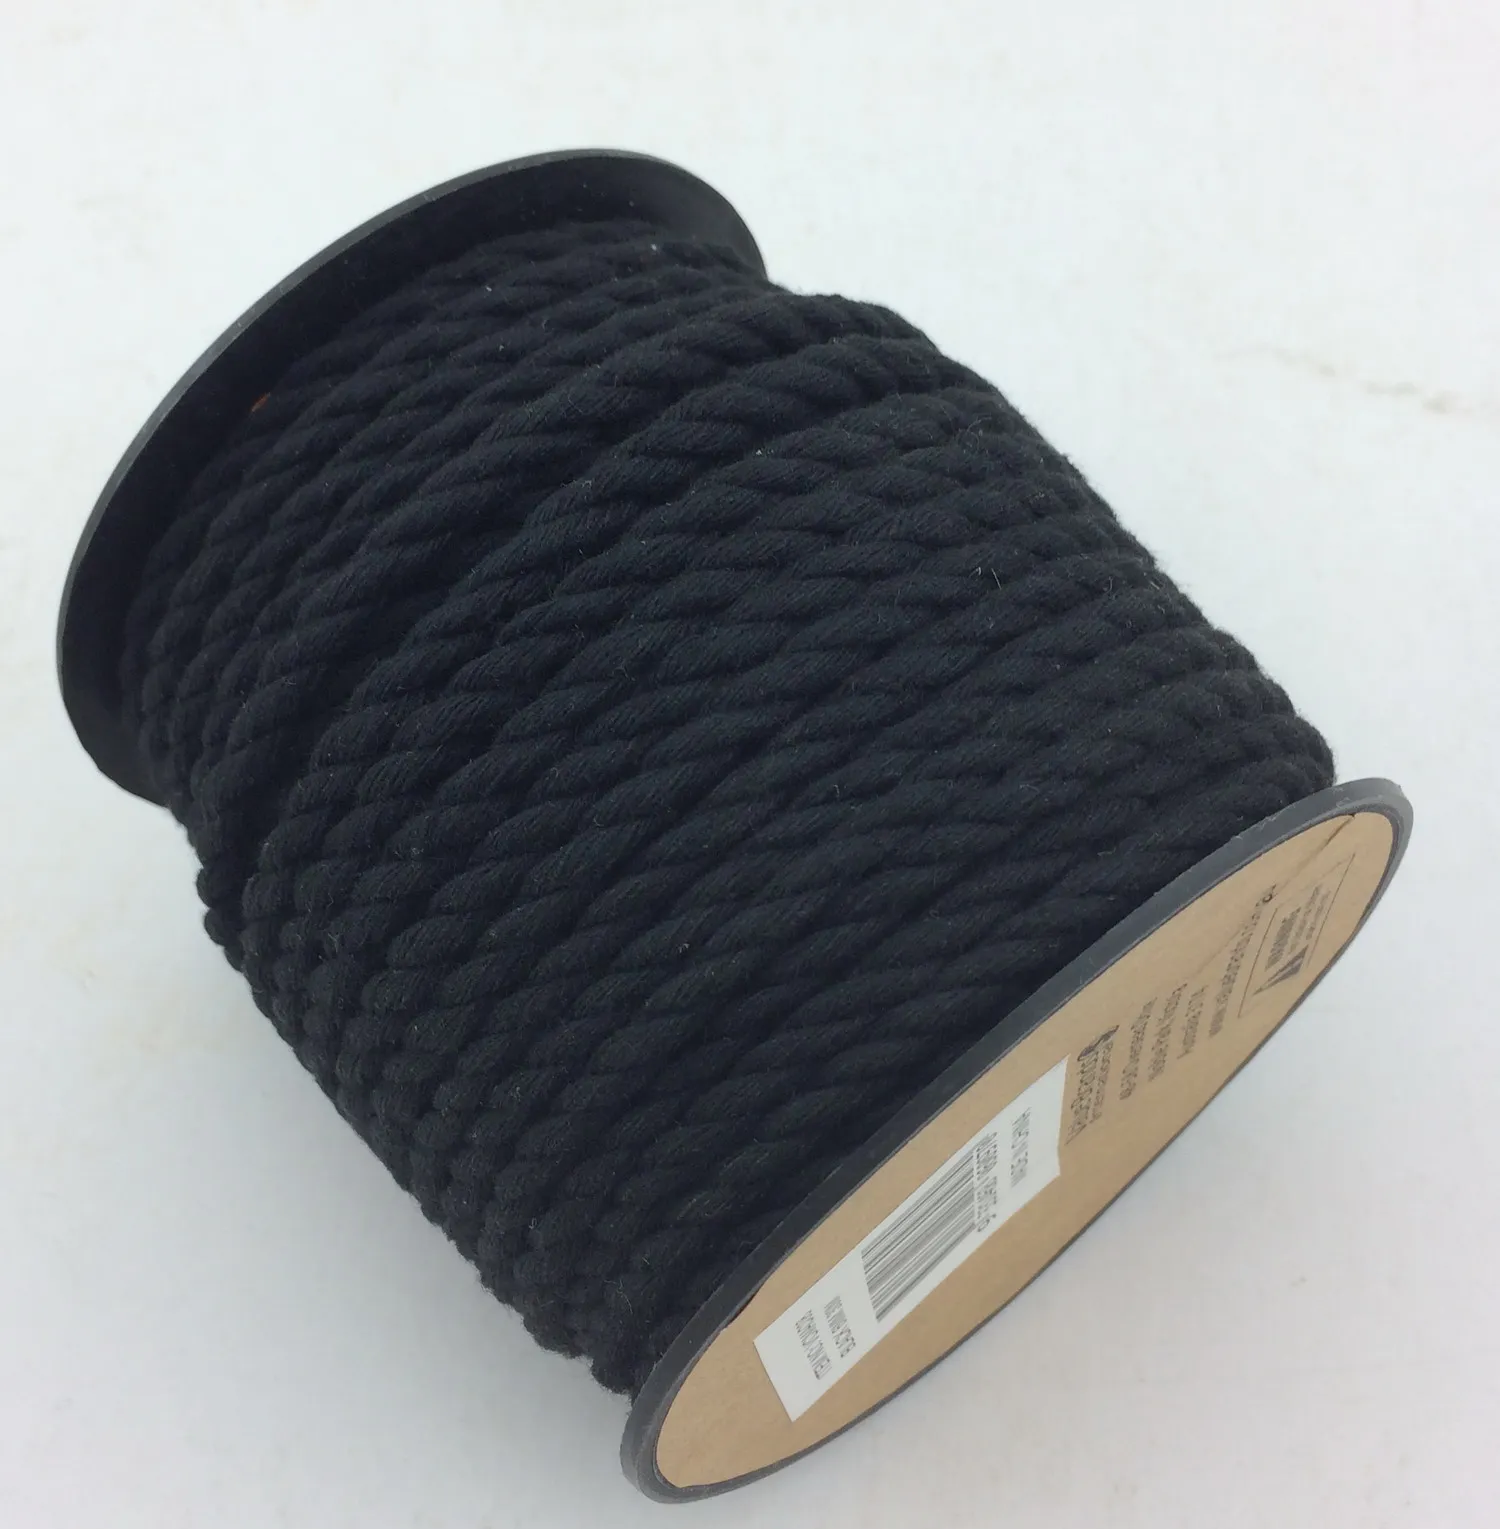 black 6mm macrame cotton cord 3